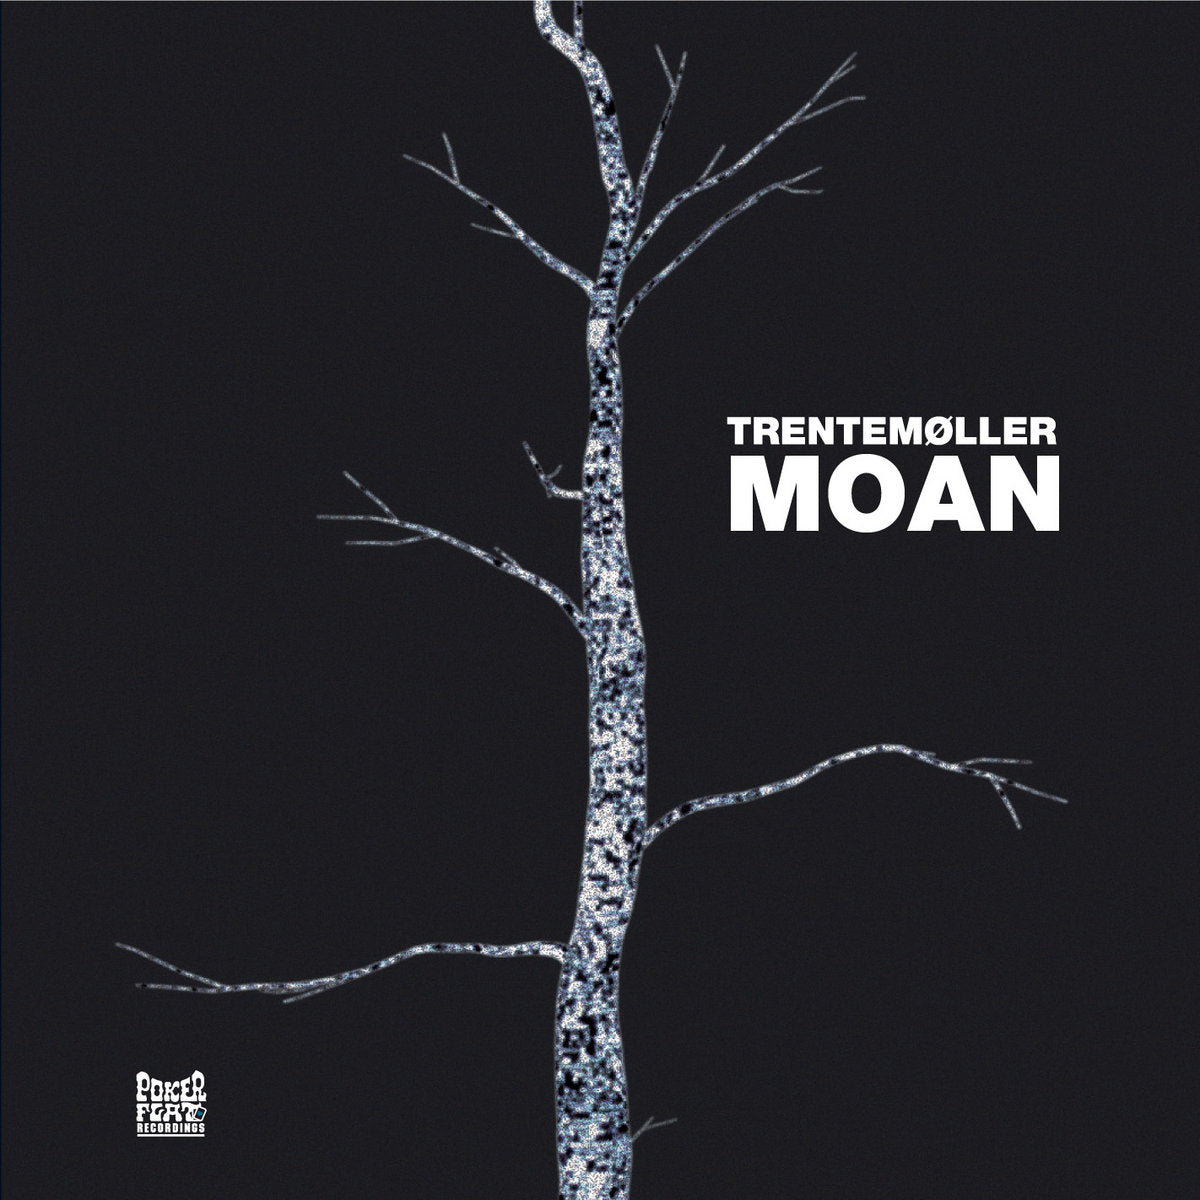 Moan (Radio Slave Rmx)